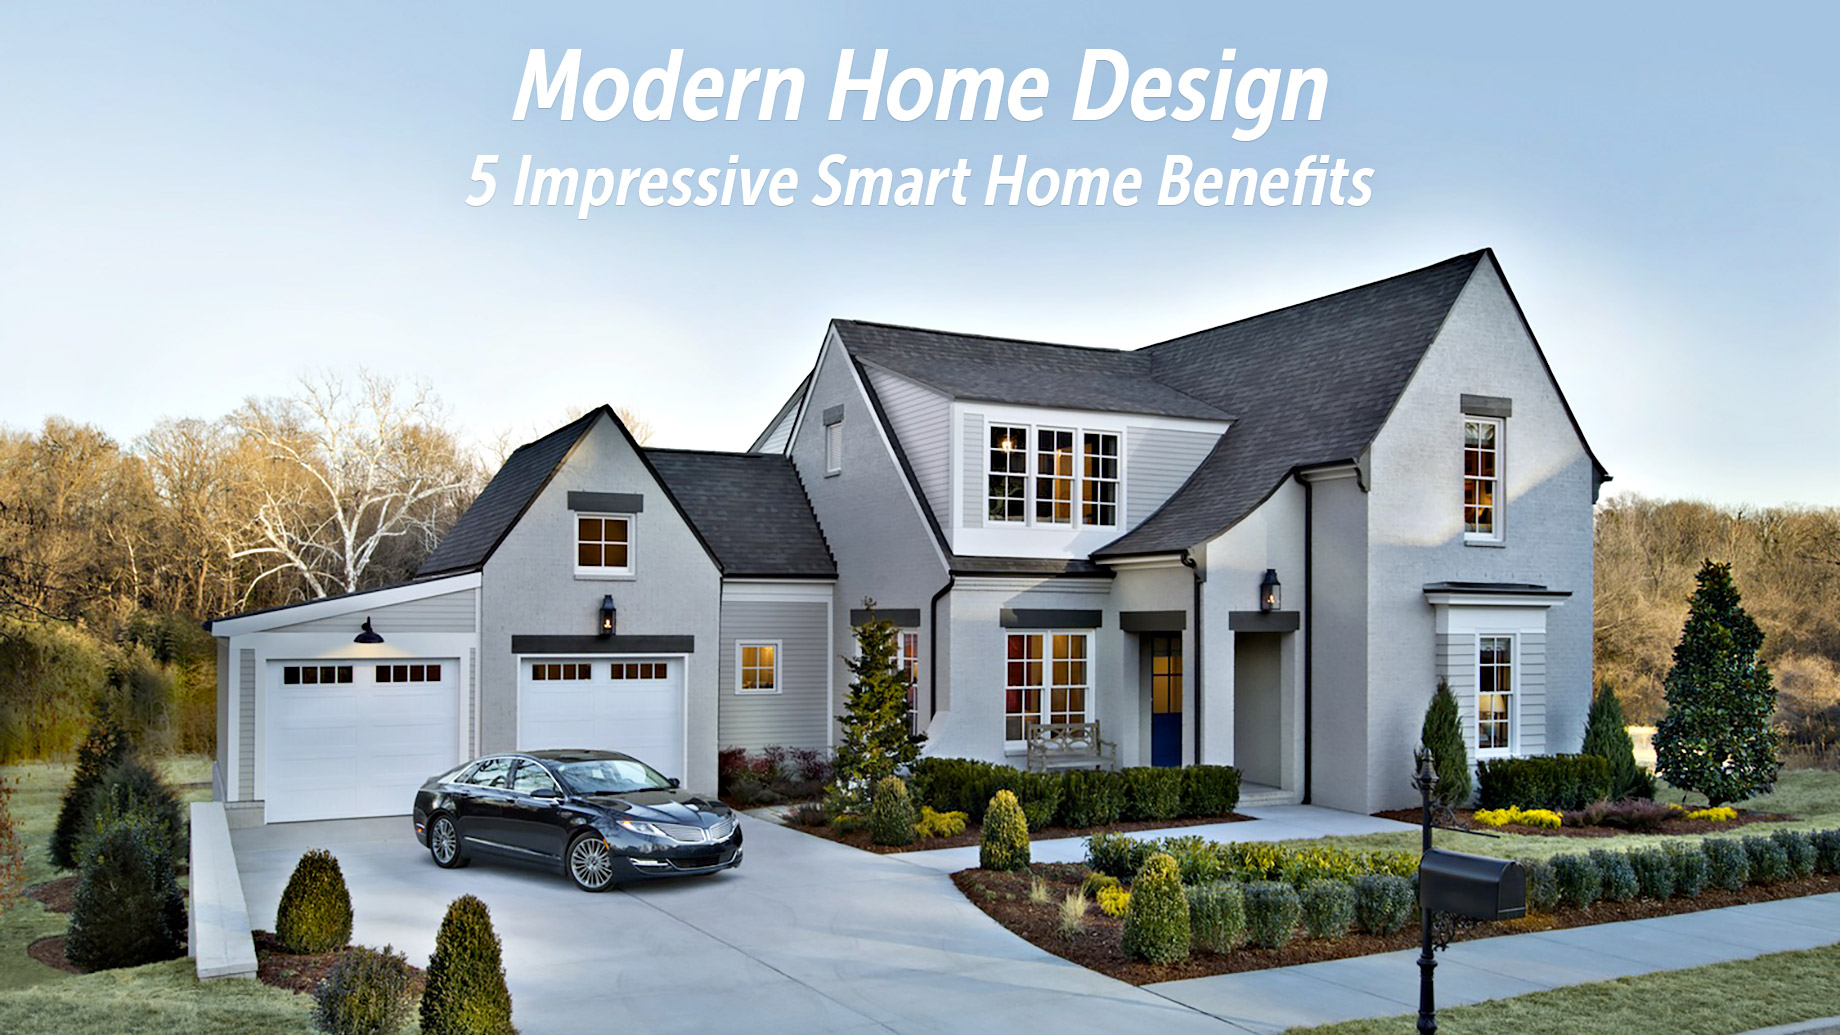 Modern Home Design - 5 Impressive Smart Home Benefits To Consider